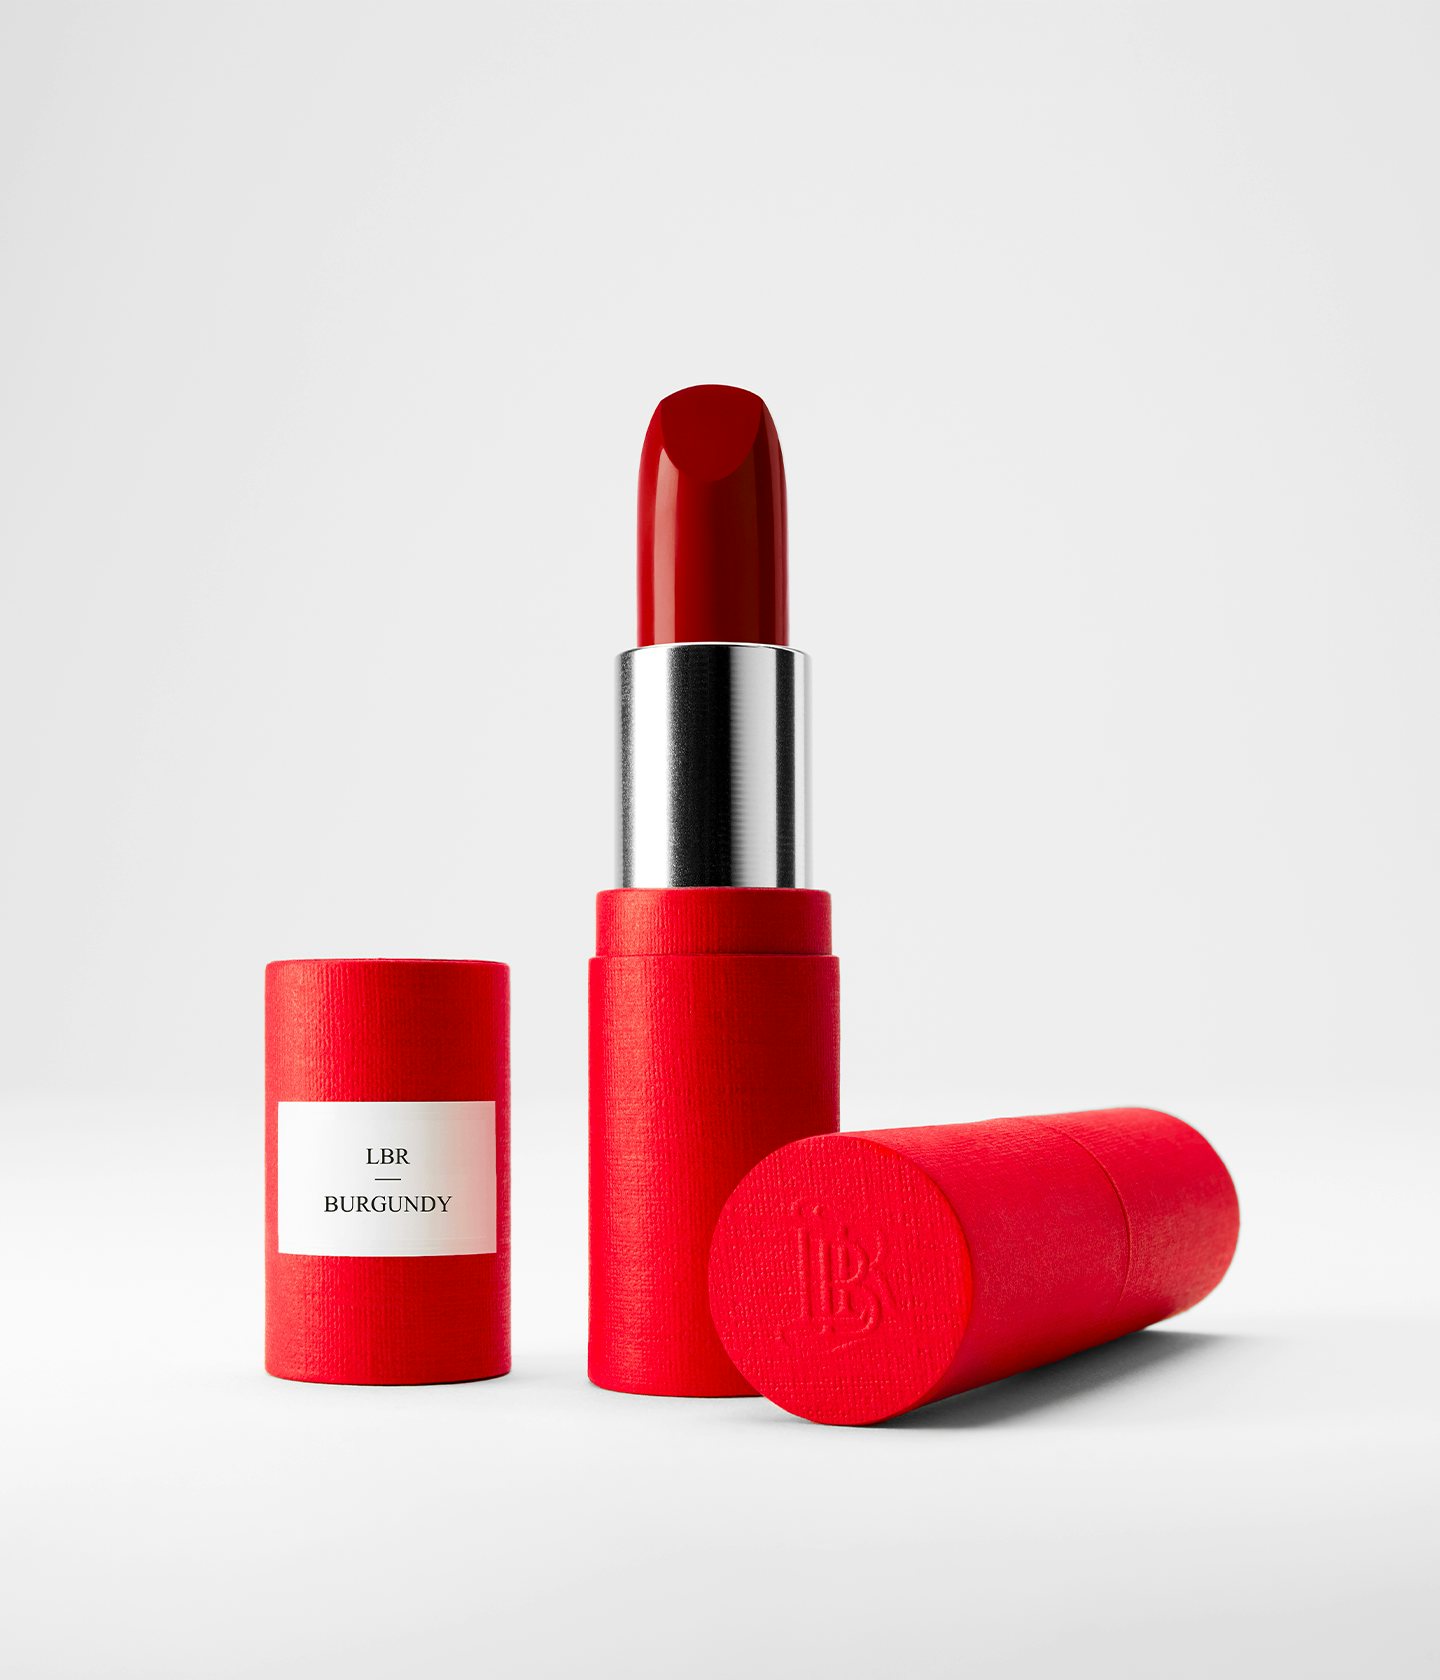 La bouche rouge Burgundy lipstick in the red paper case